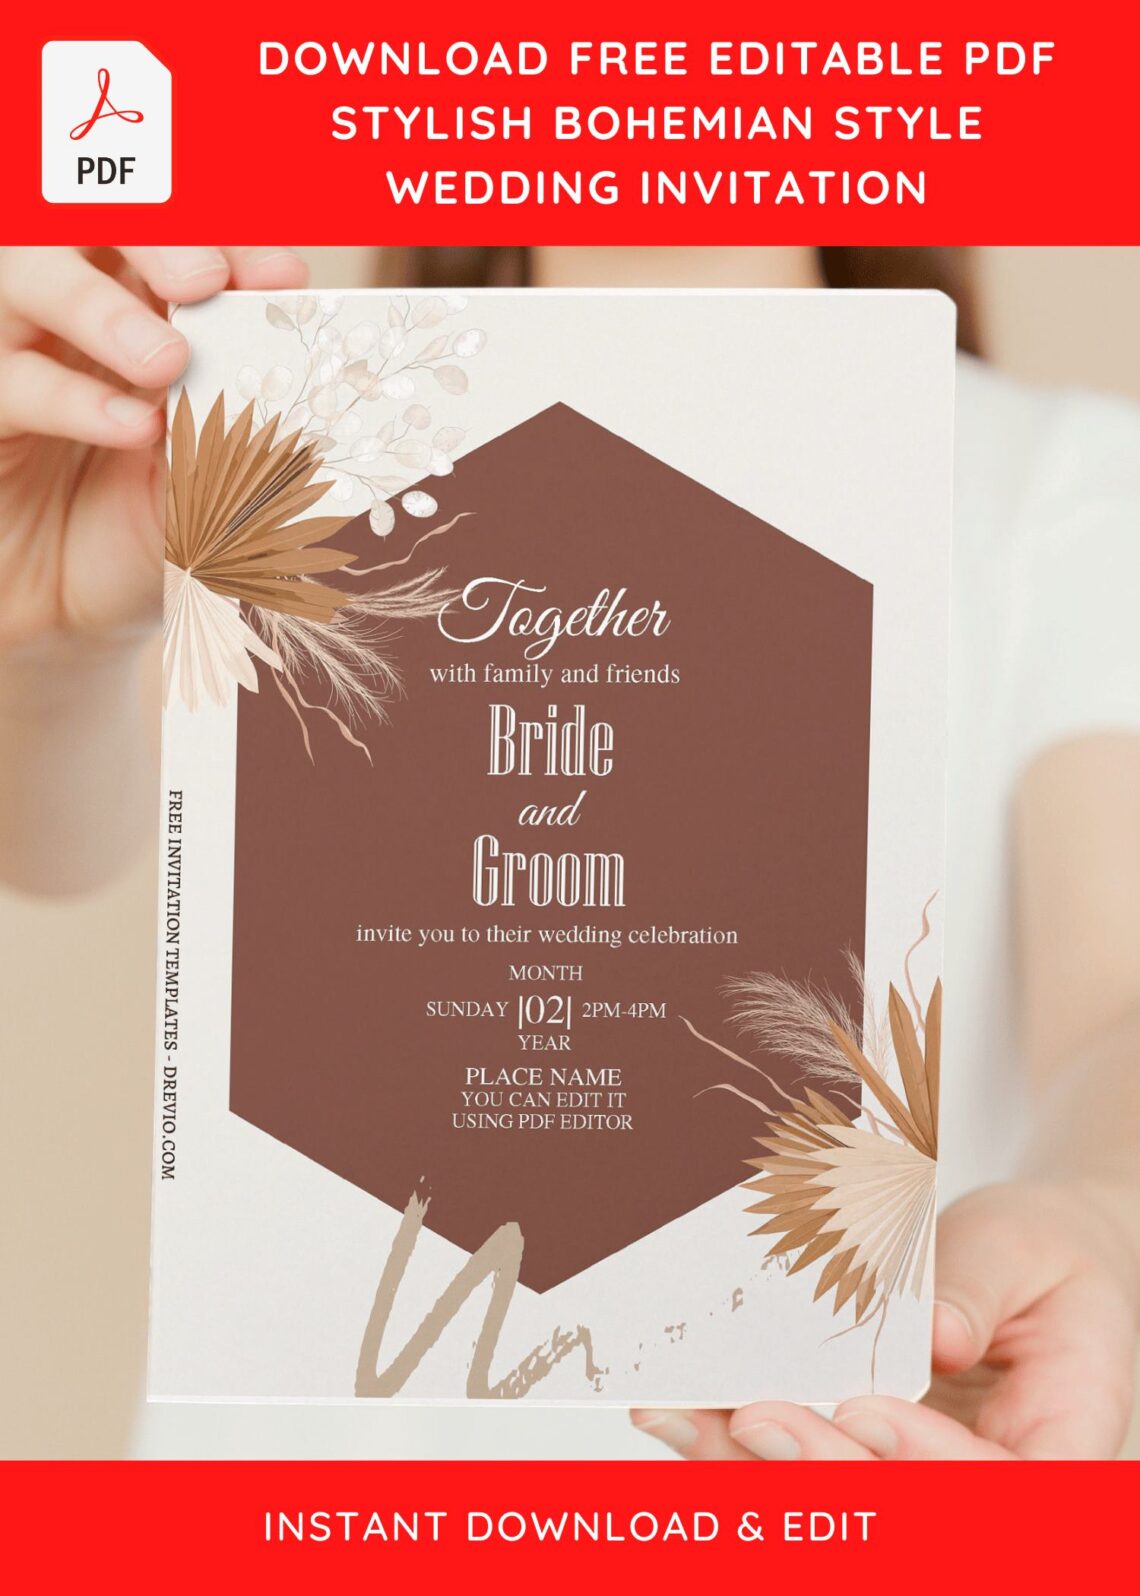 (Free Editable PDF) Earthy Bohemian Style Wedding Invitation Templates with gorgeous Pampas grass